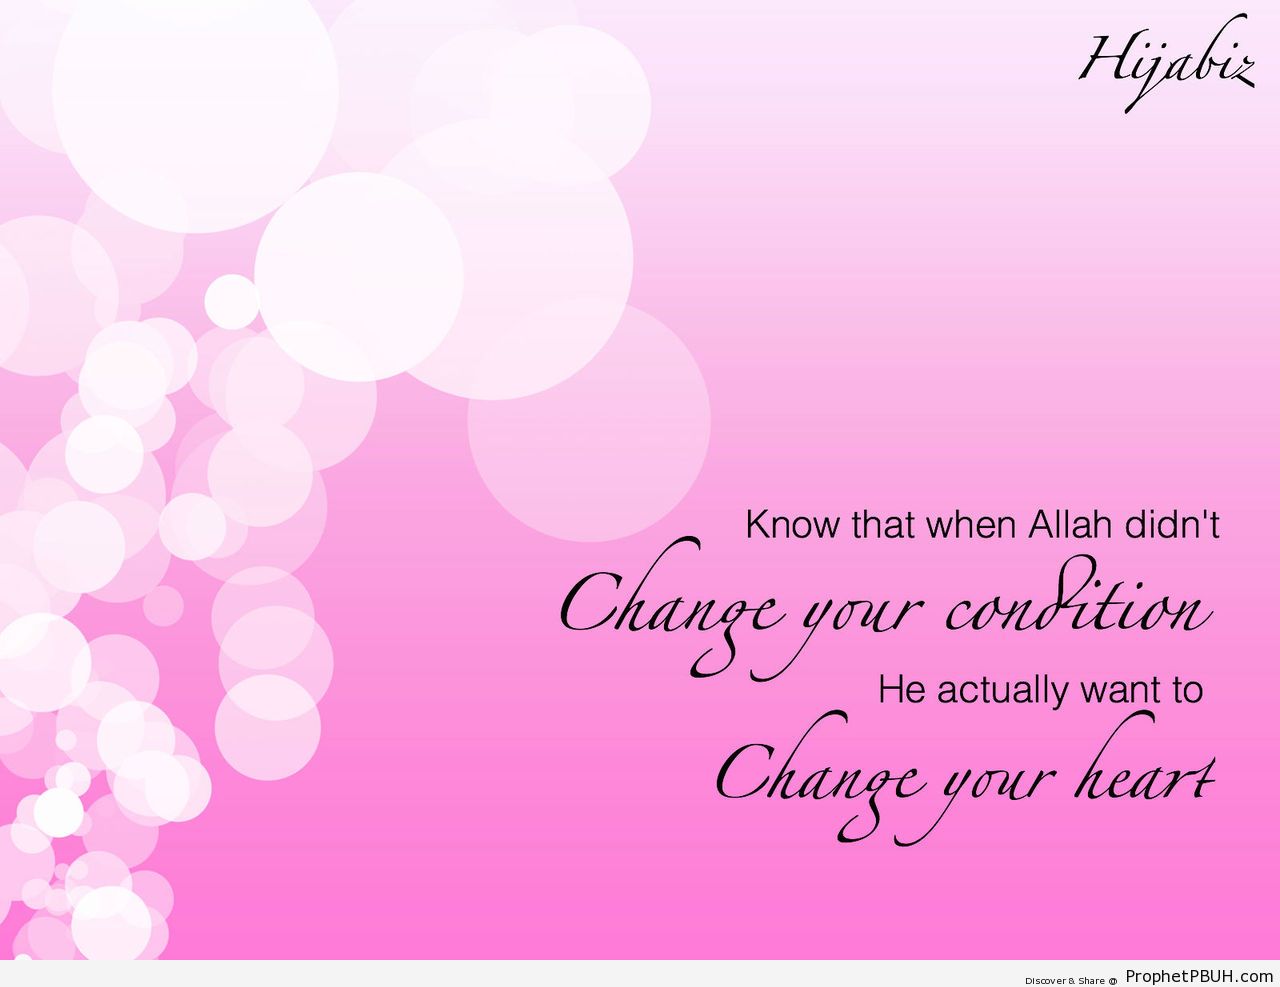 Ponder back again and again why Allah... - Islamic Quotes, Hadiths, Duas